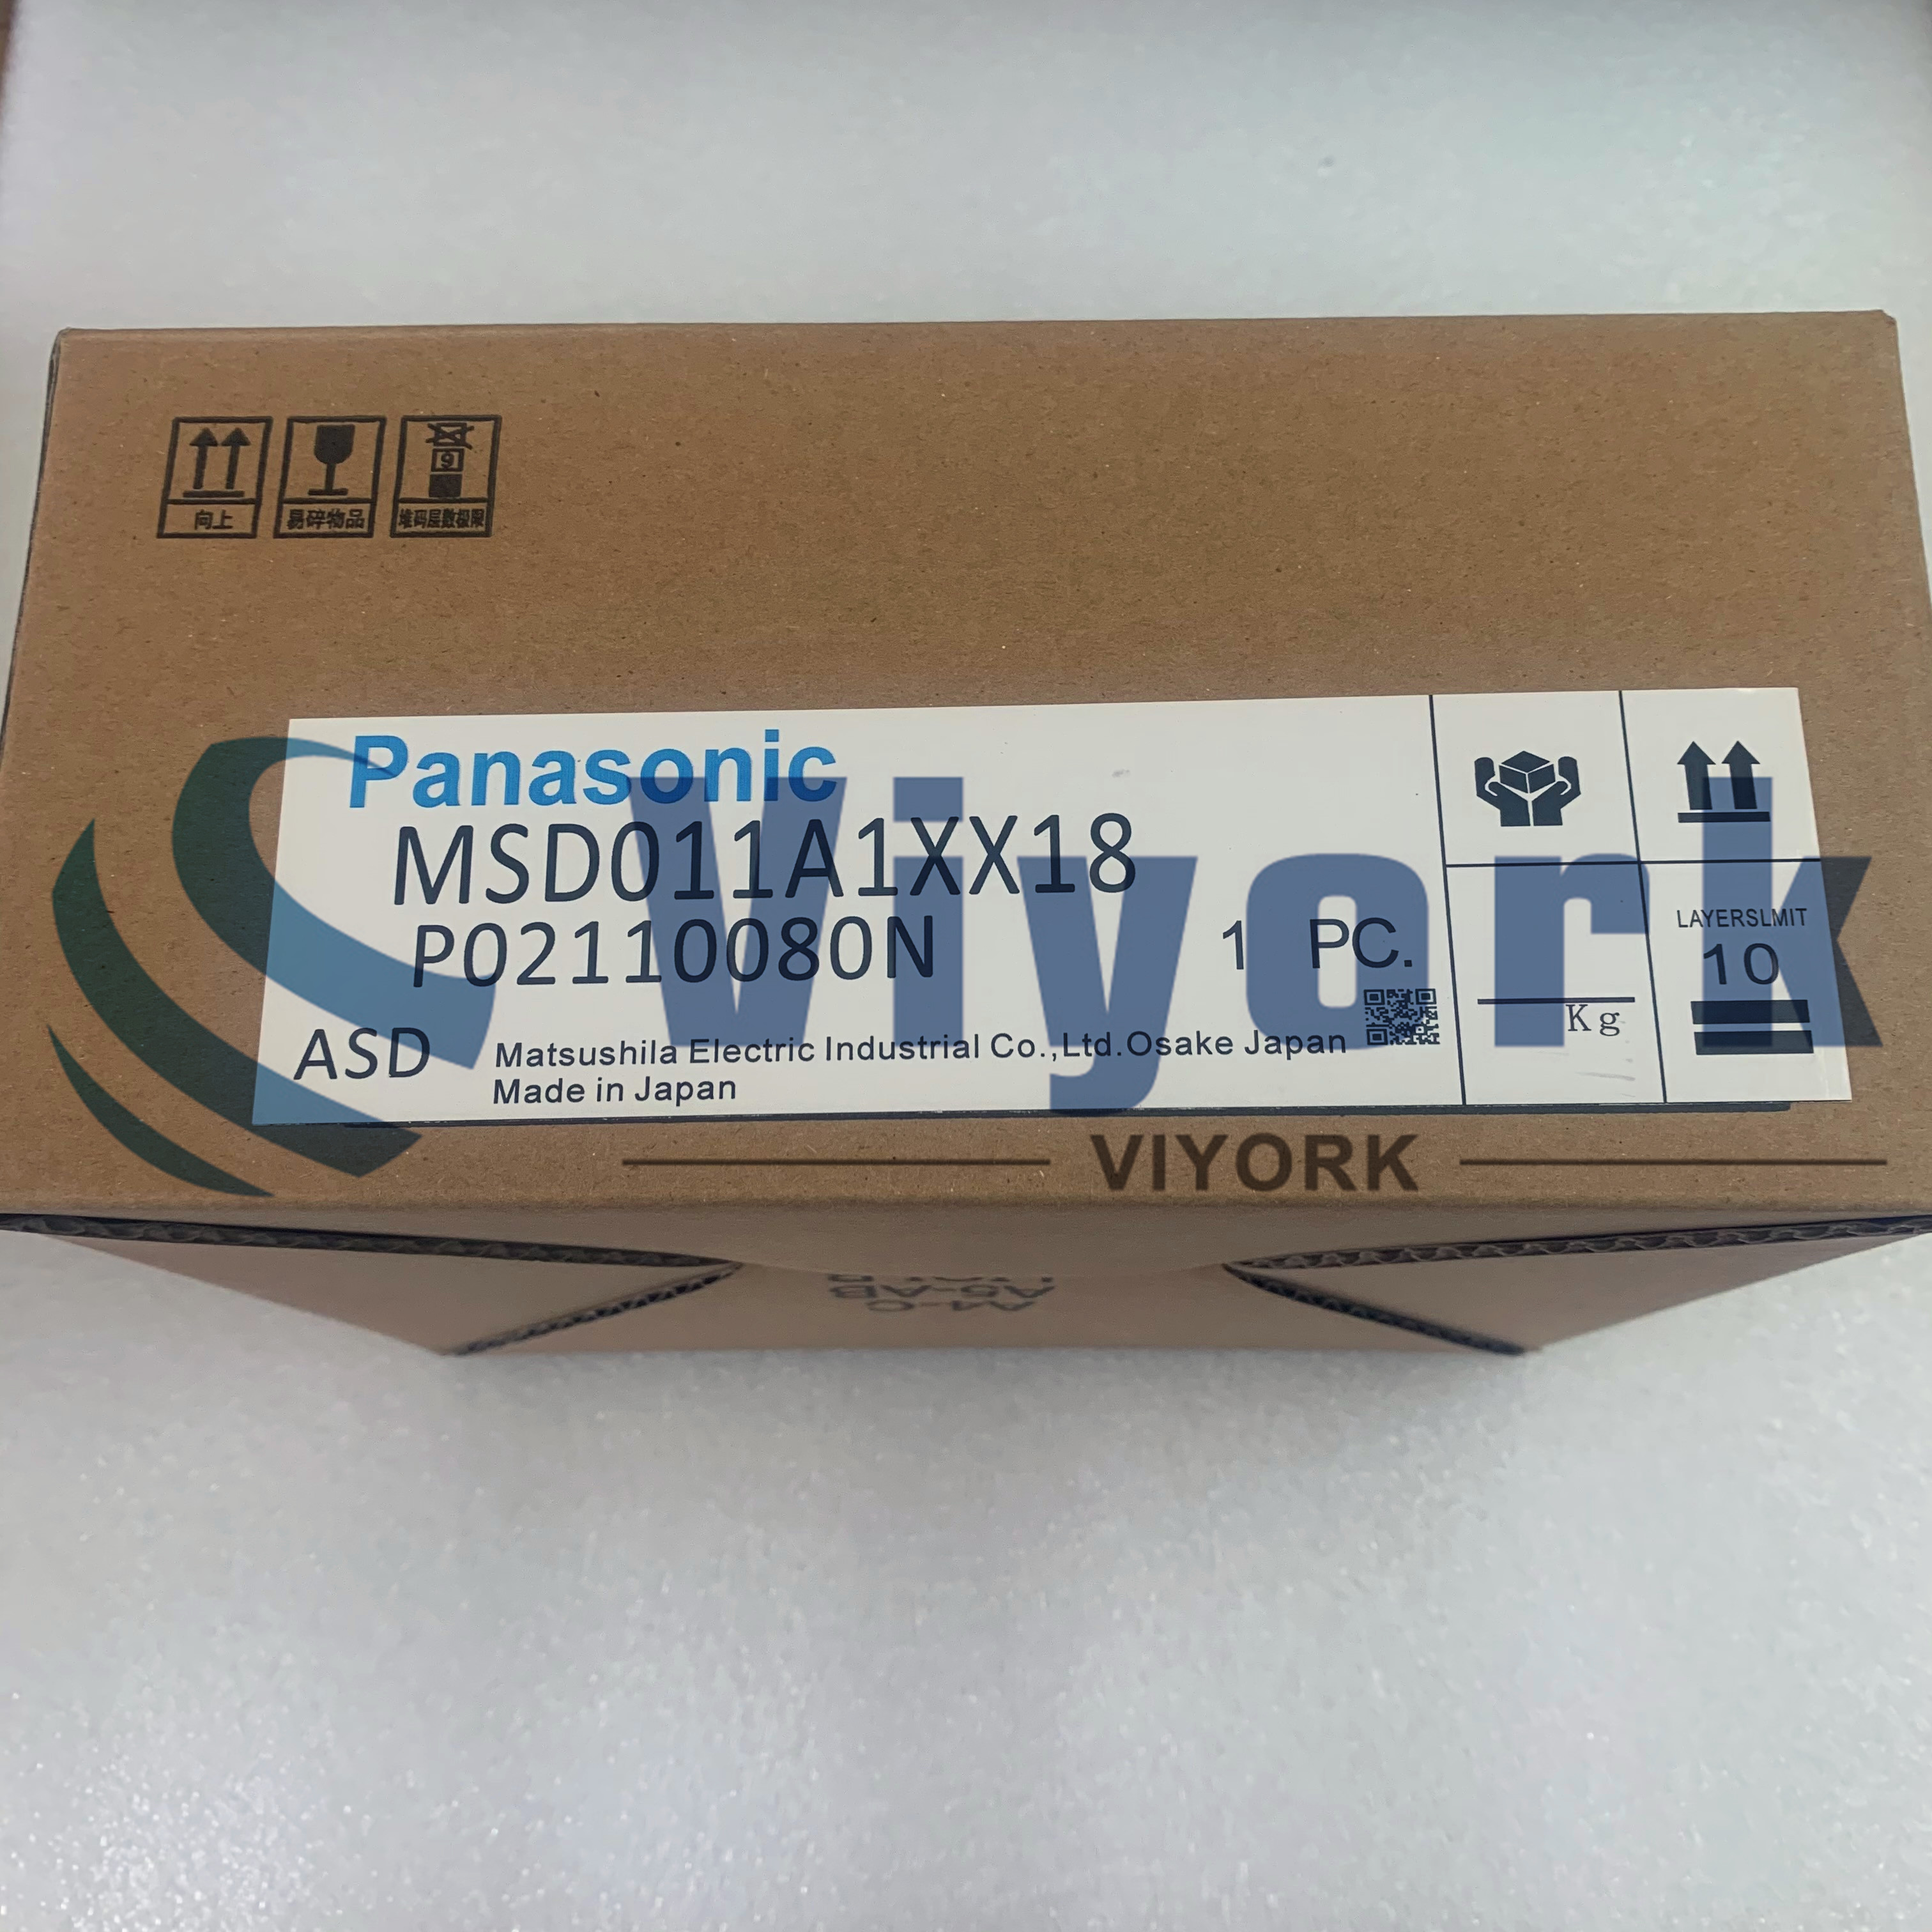 Panasonic MSD011A1XX18 SERVO DRIVE NEW